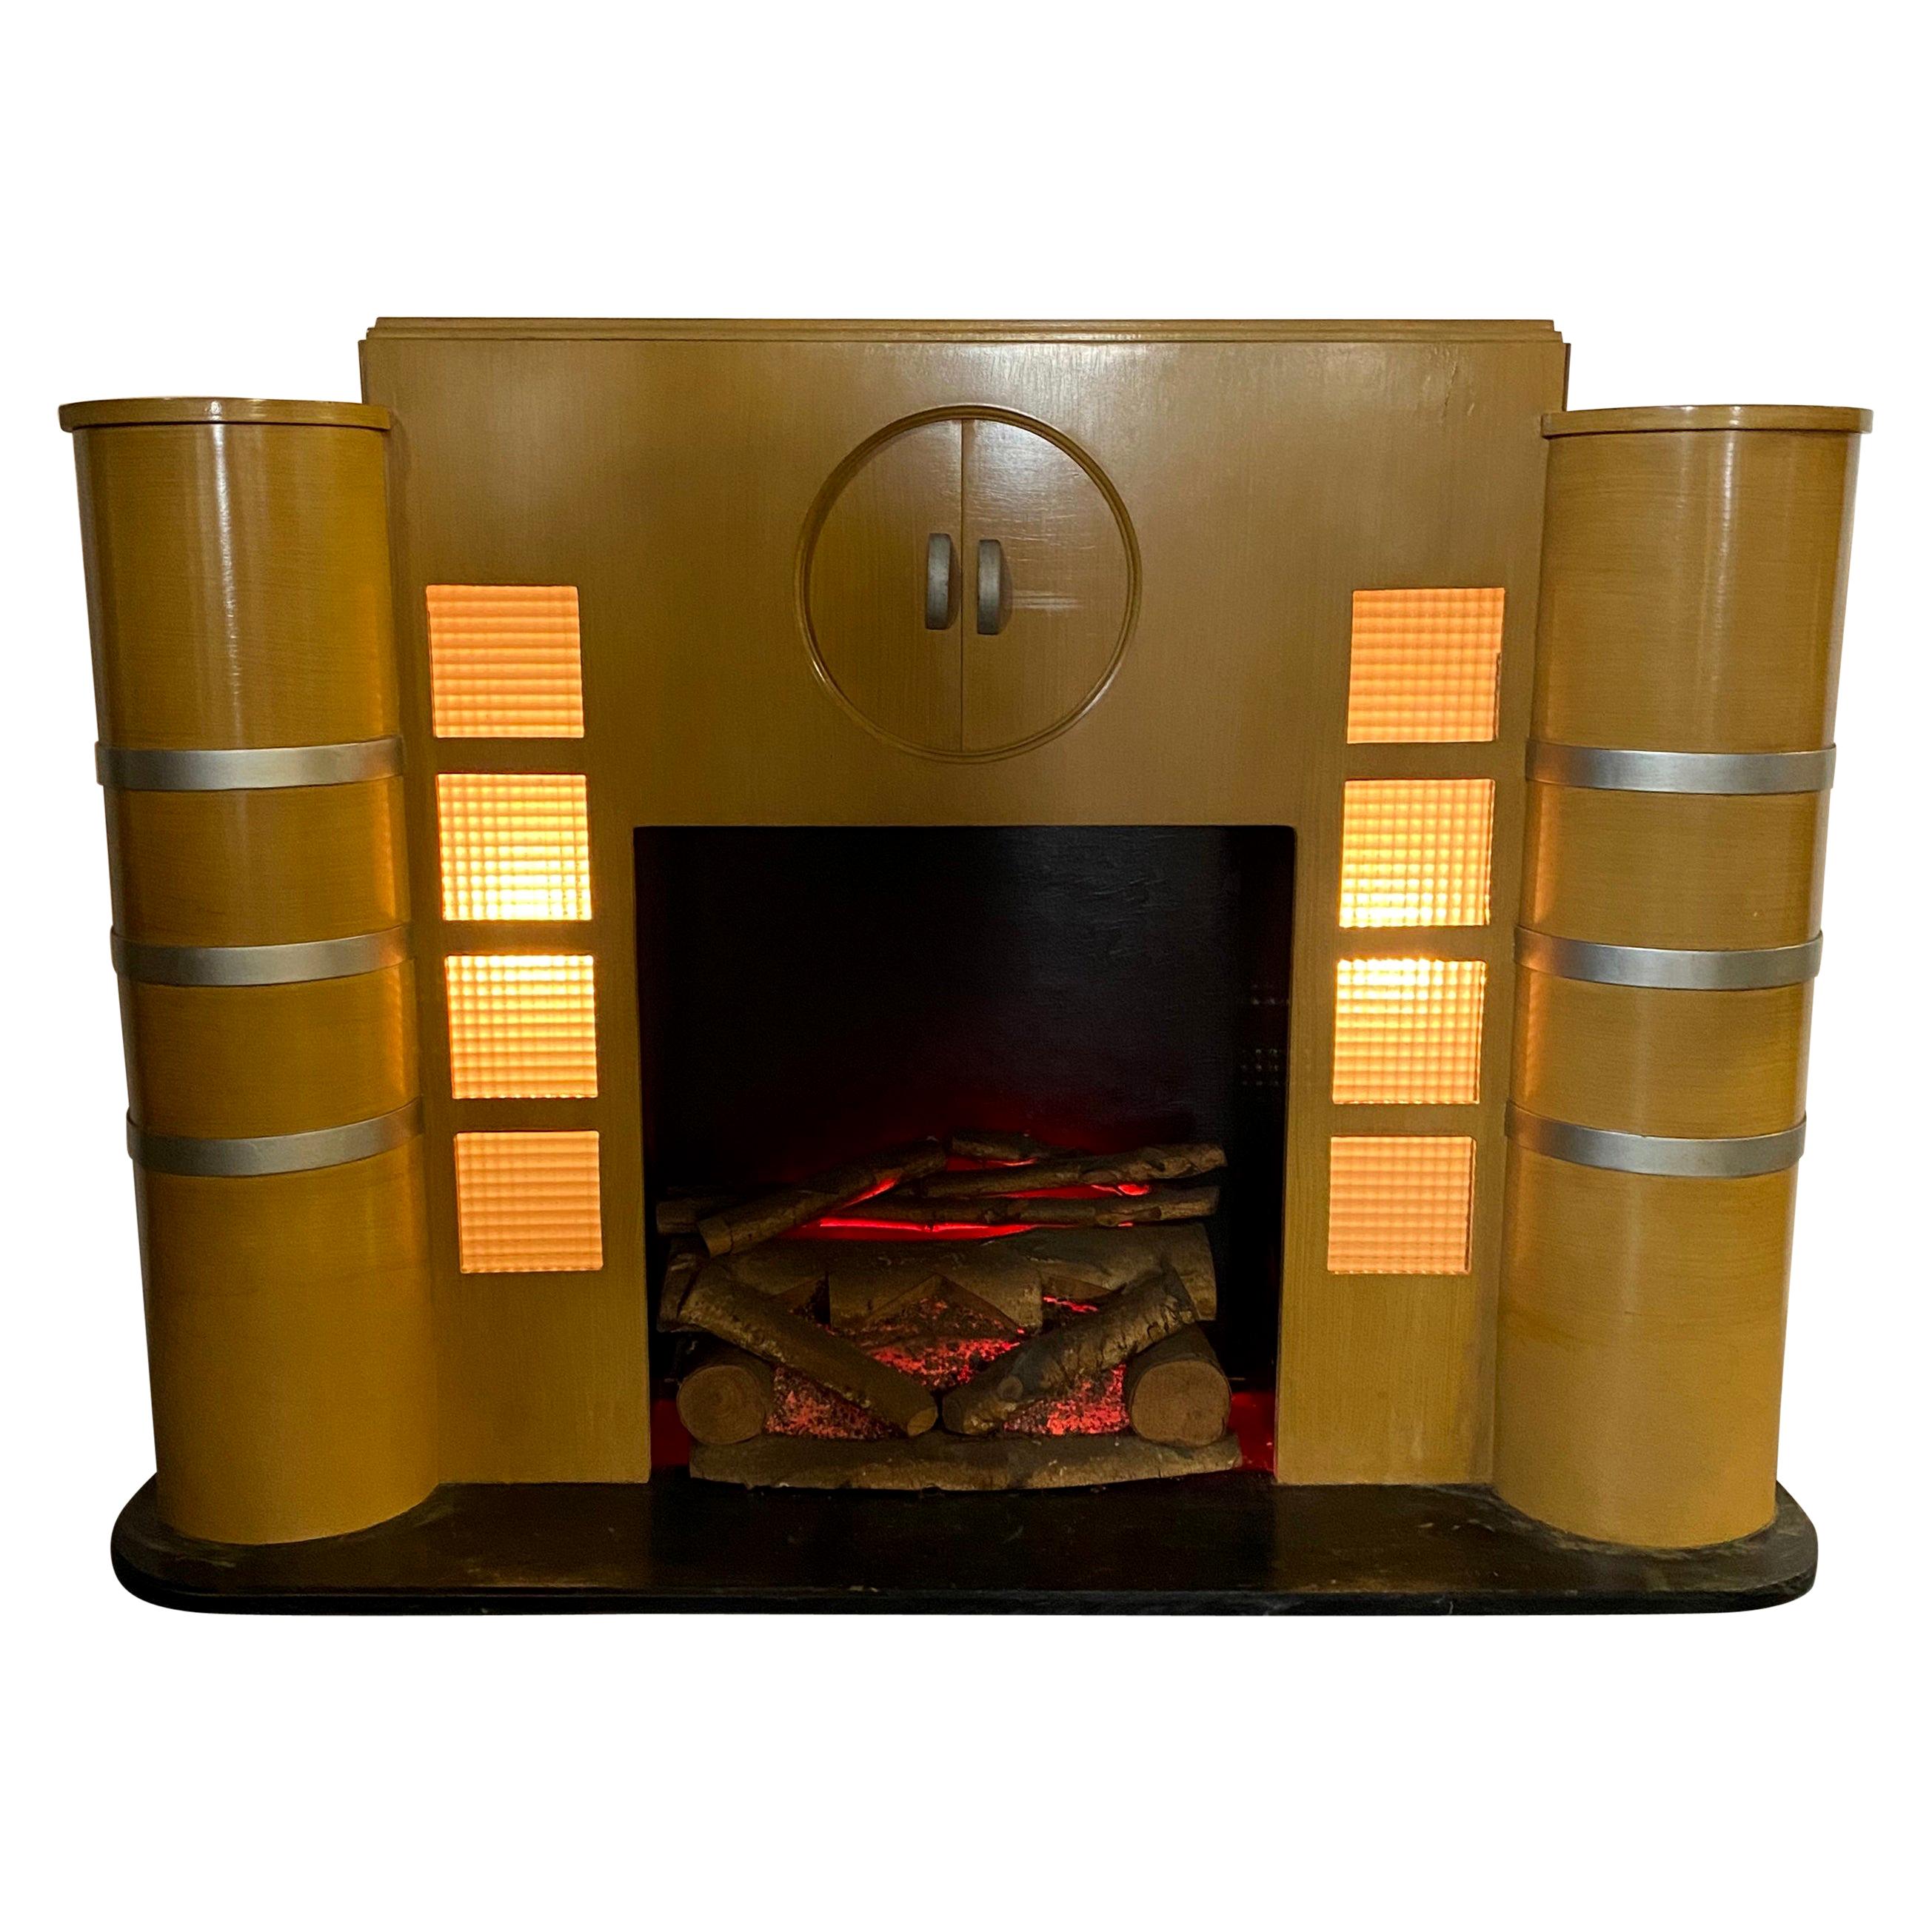 Rare Art Deco Streamline Fireplace, Majestic Electric Fireplace Vintage